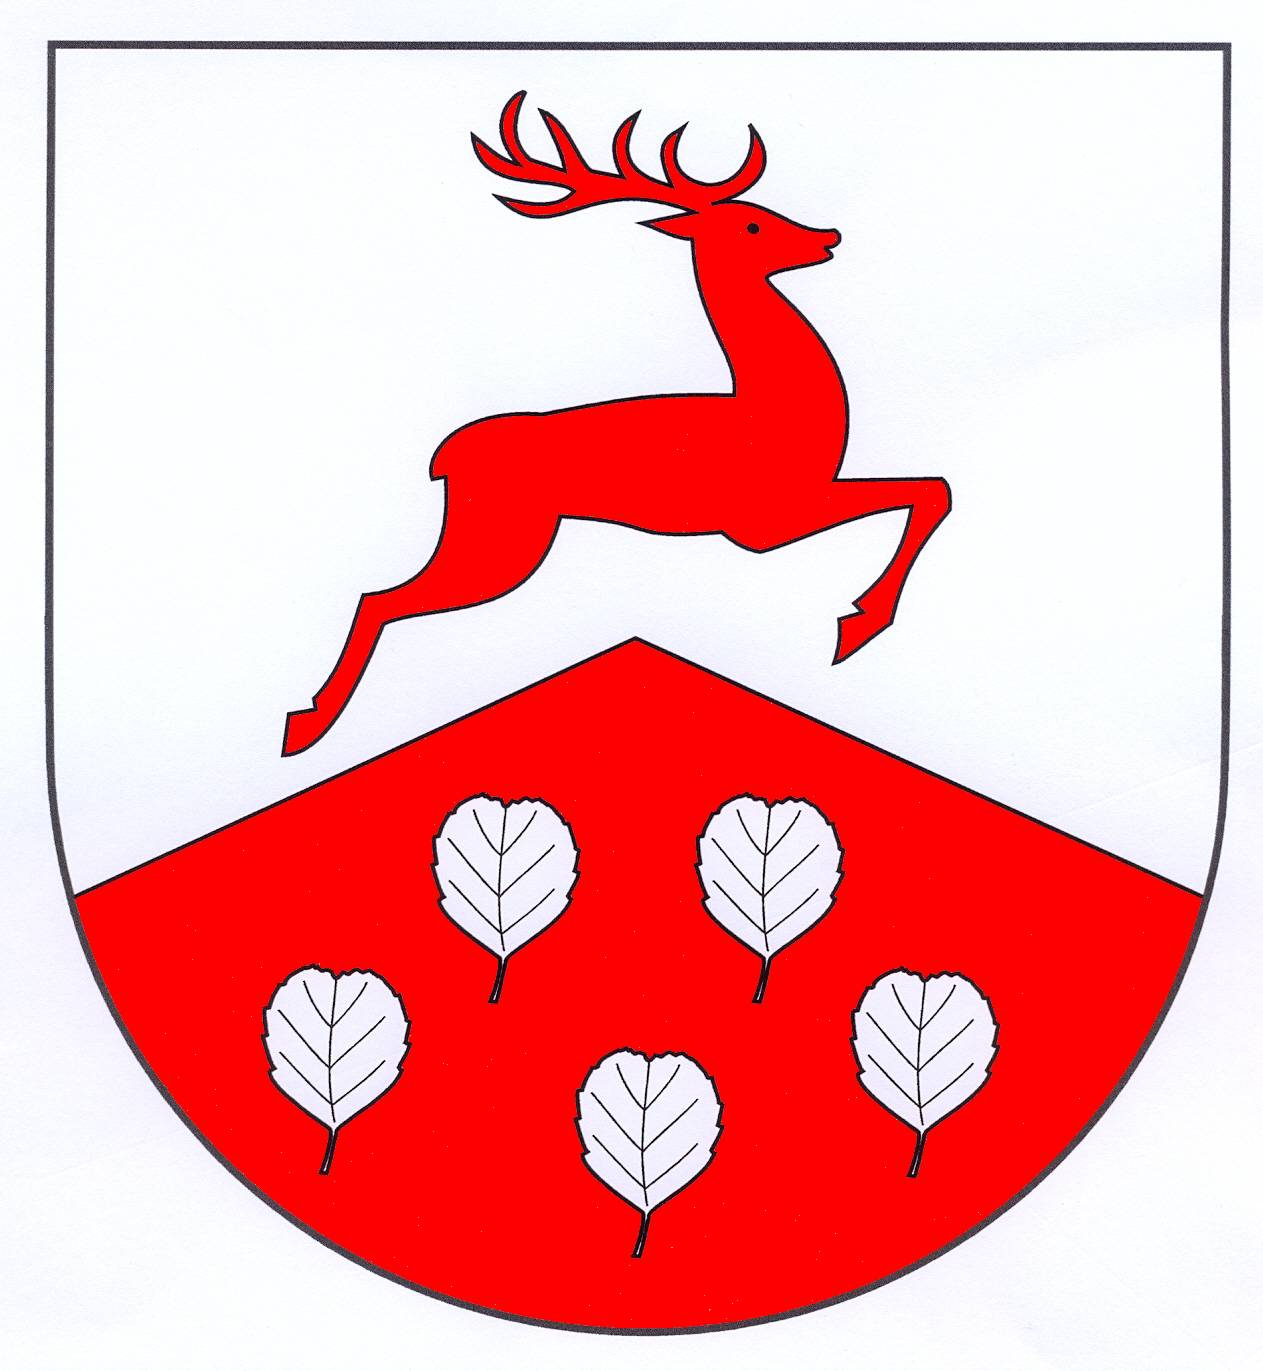 Wappen Gemeinde Brinjahe, Kreis Rendsburg-Eckernförde